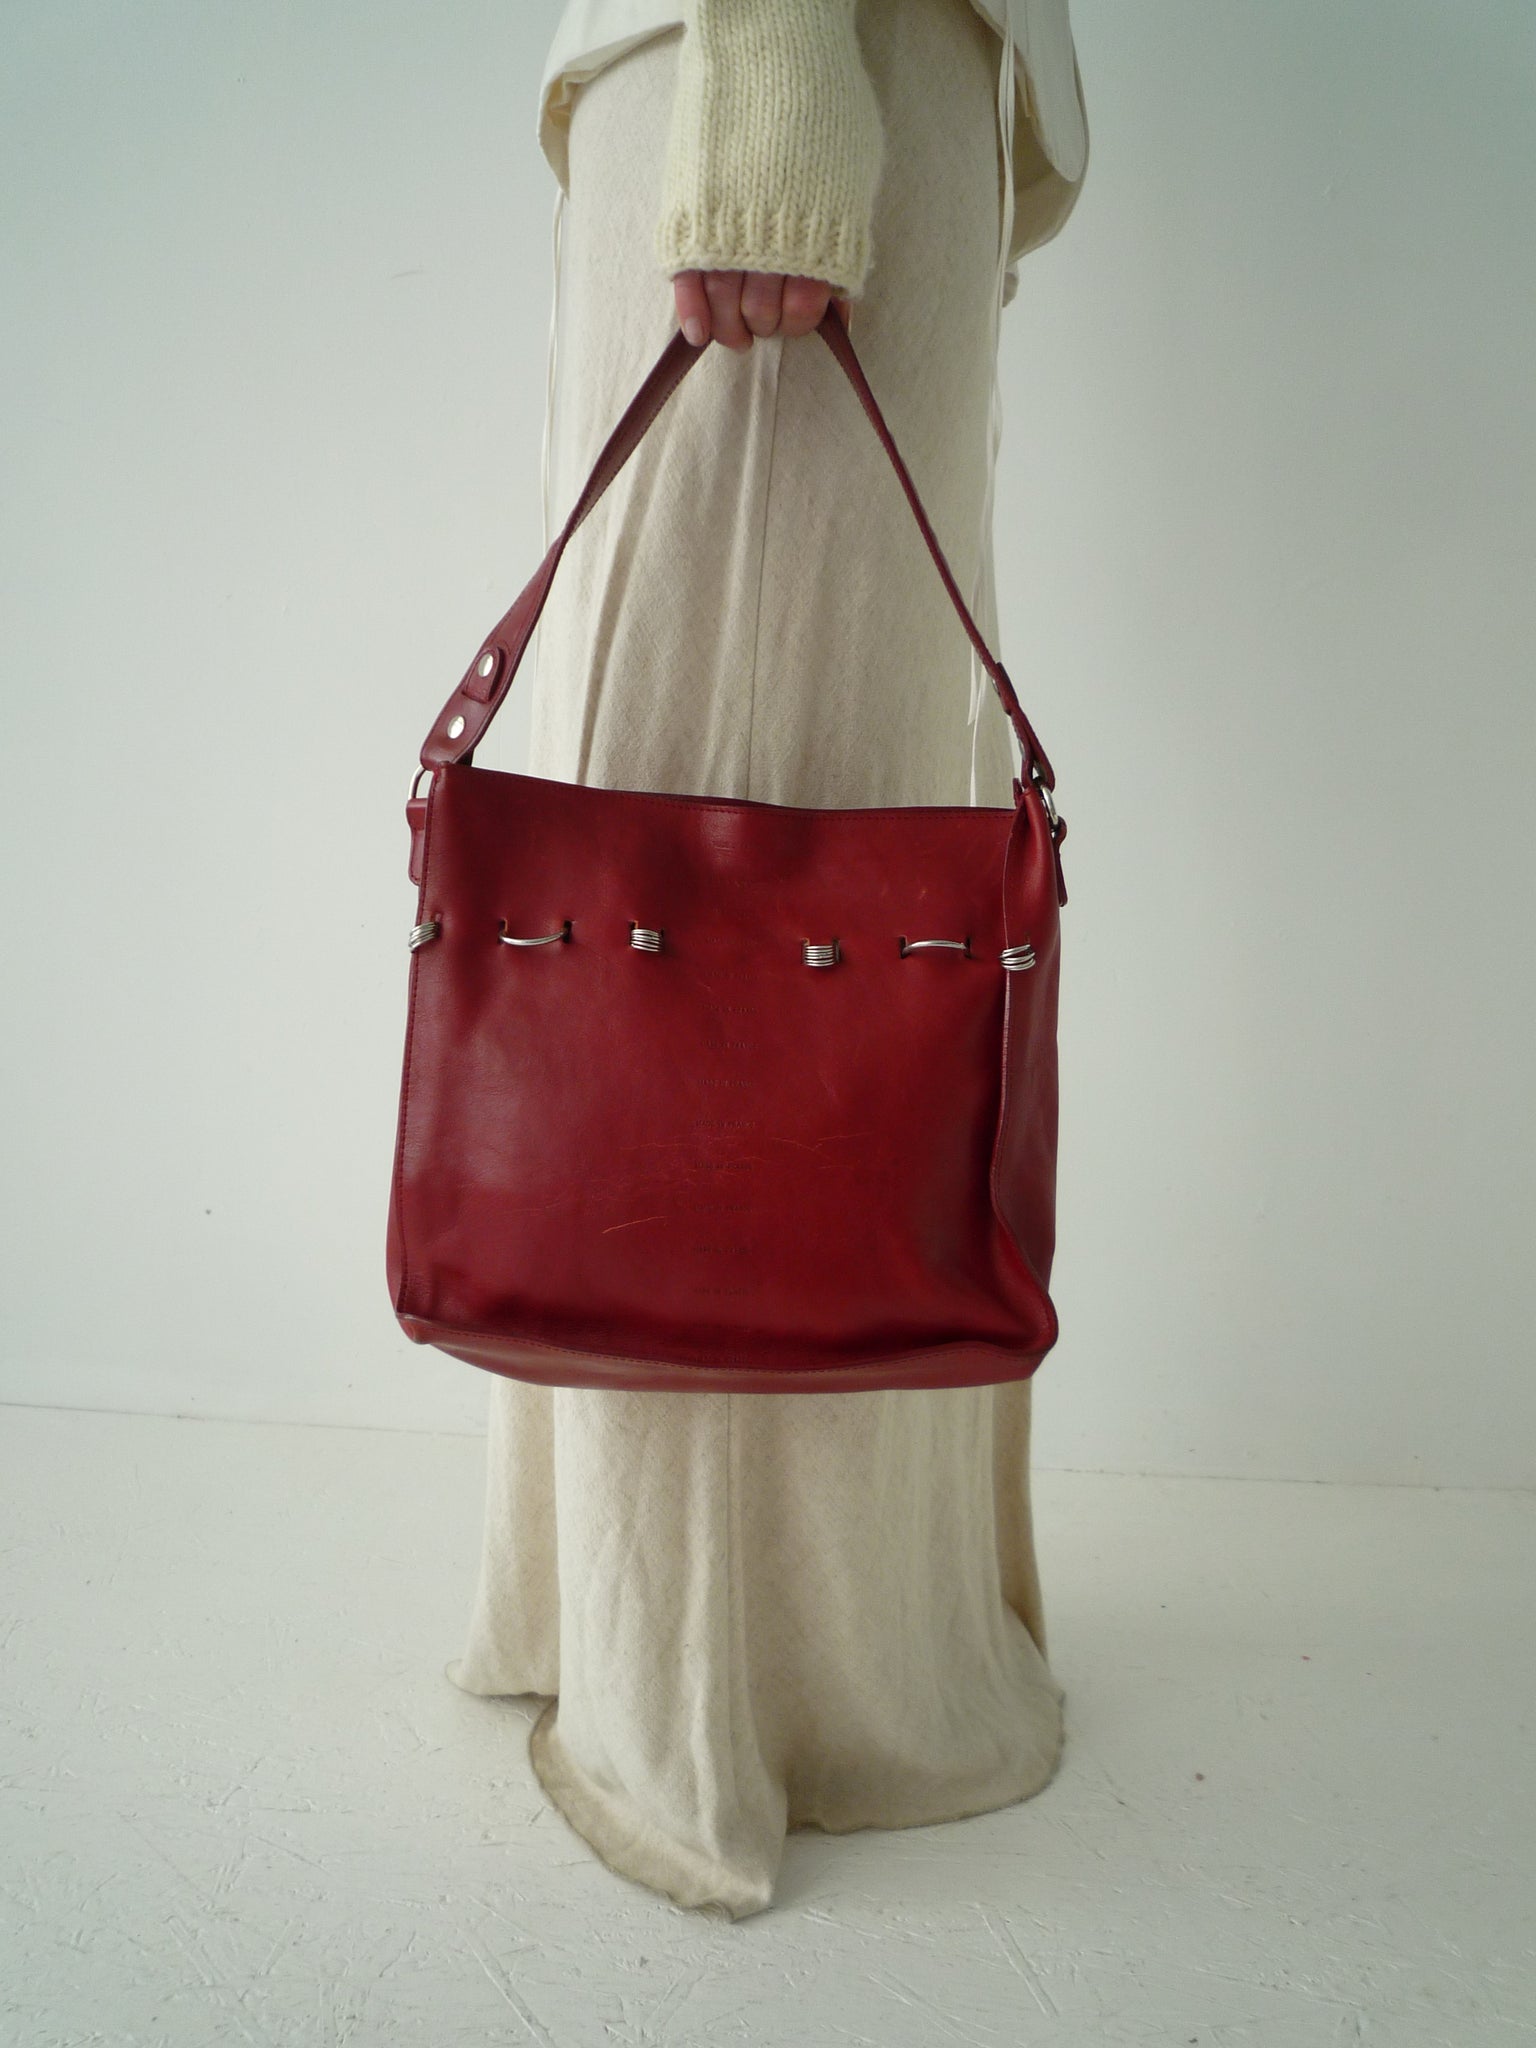 Piercing Bag Red